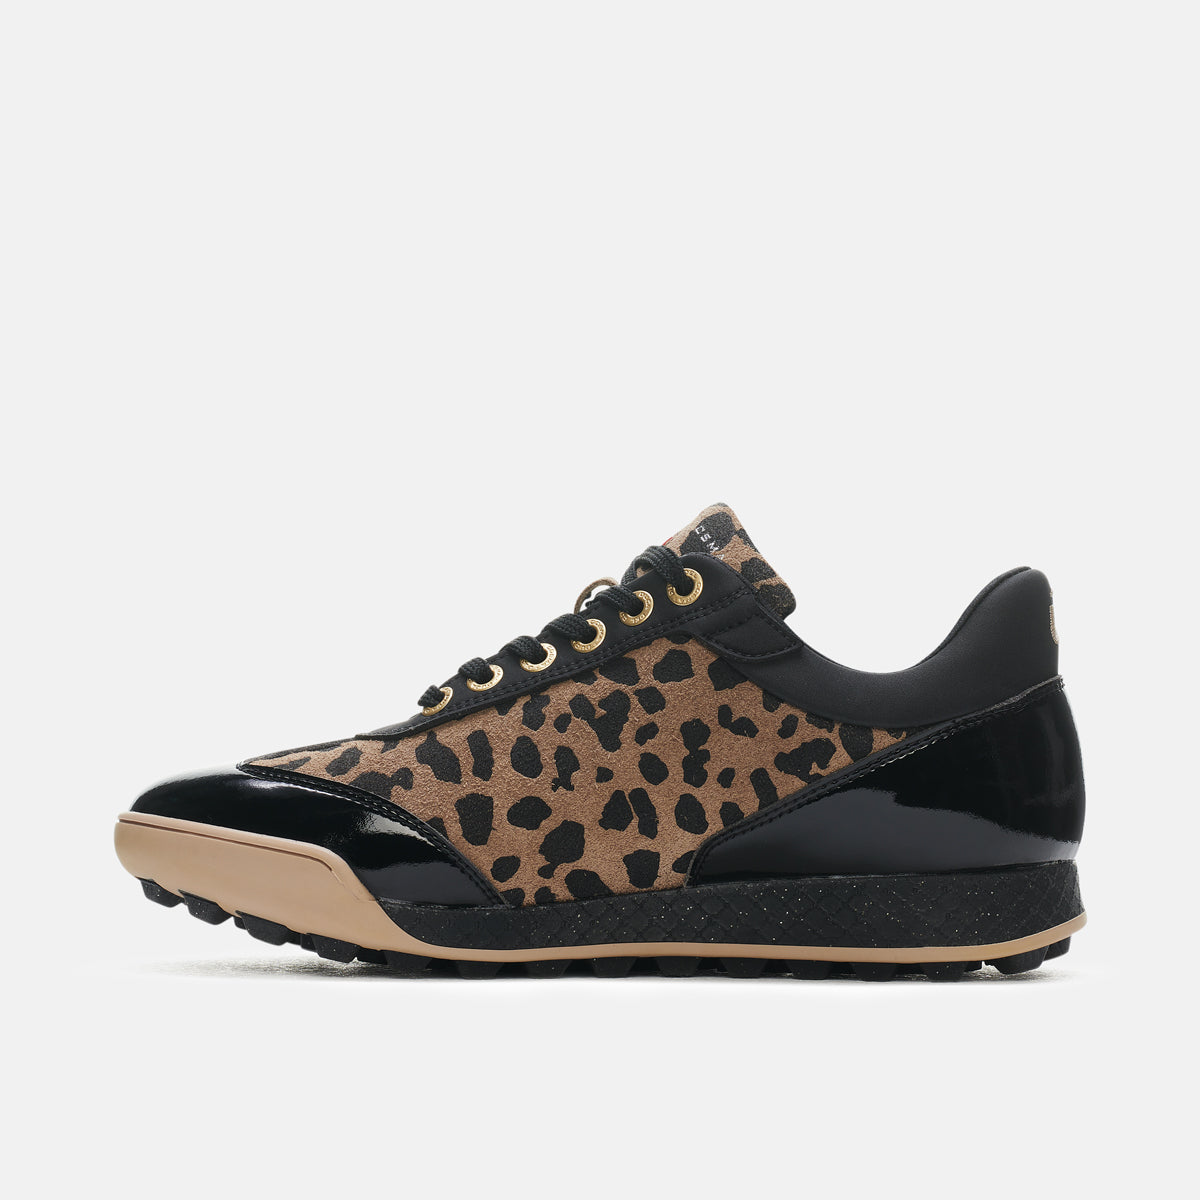 King Cheetah Black Women's Golf shoe fully waterproof with animal print from duca del cosma